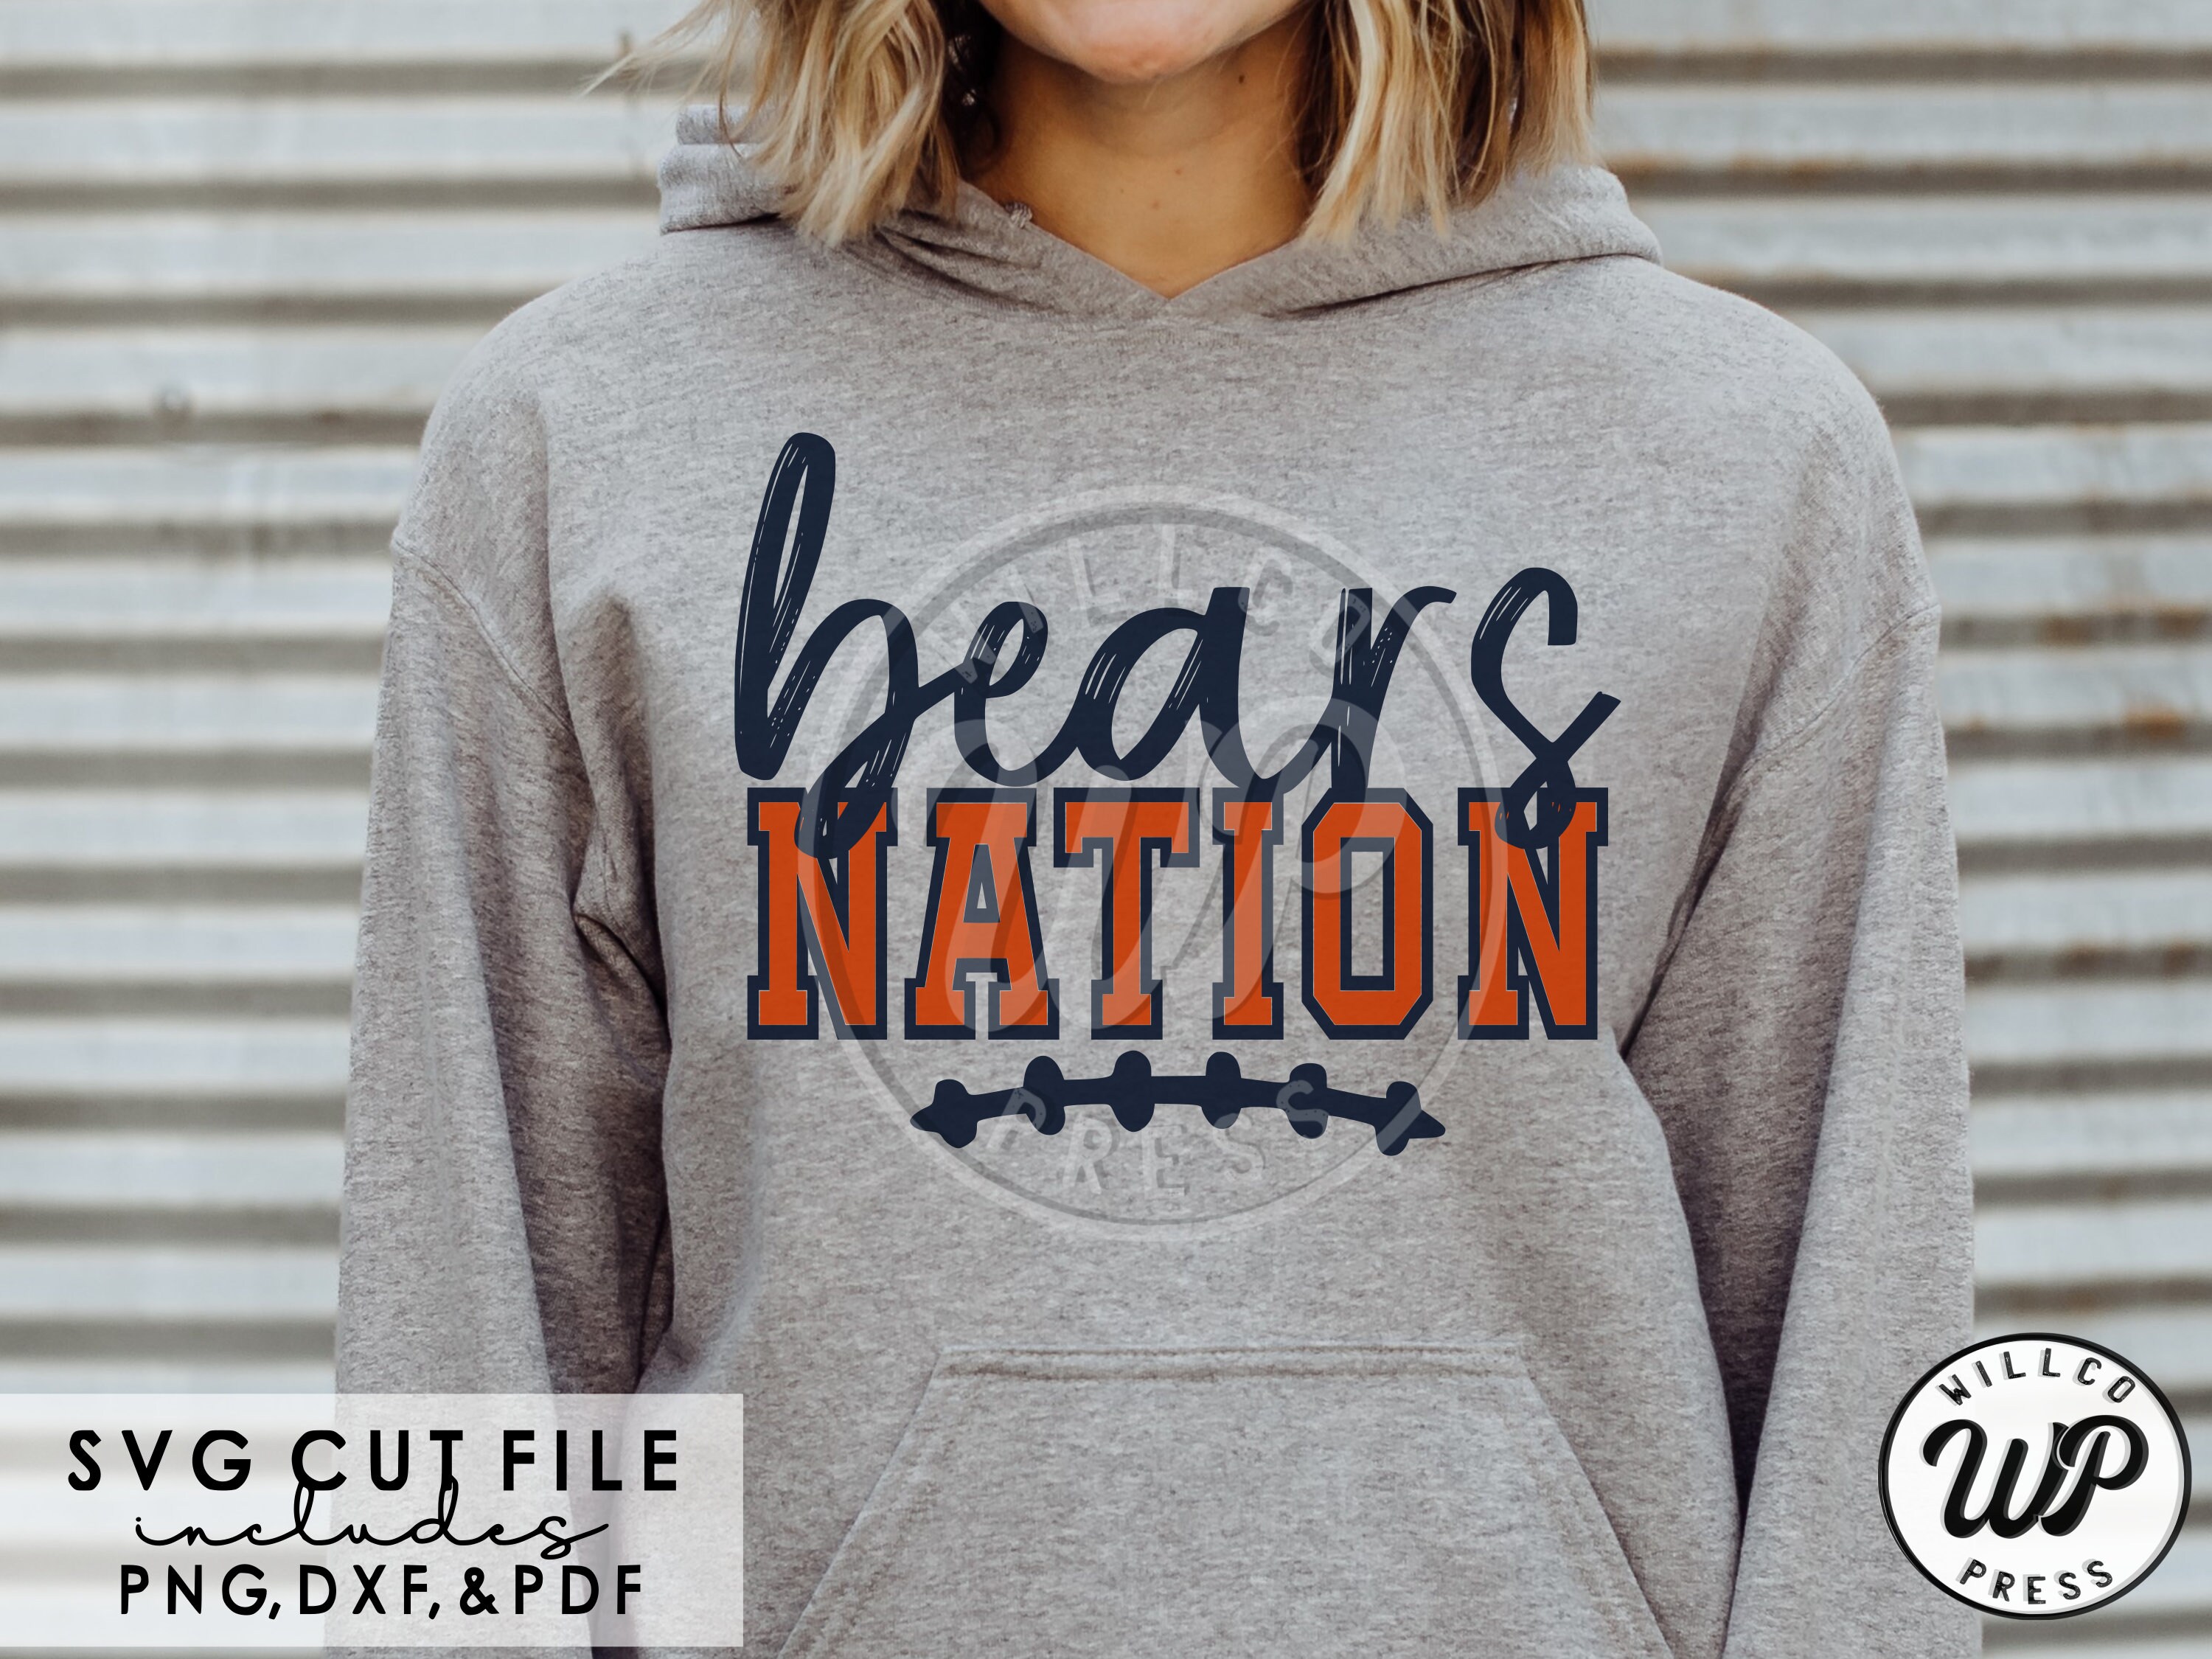 Chicago Bears. digital print sublimation Hoodies Sweatshirt zipper